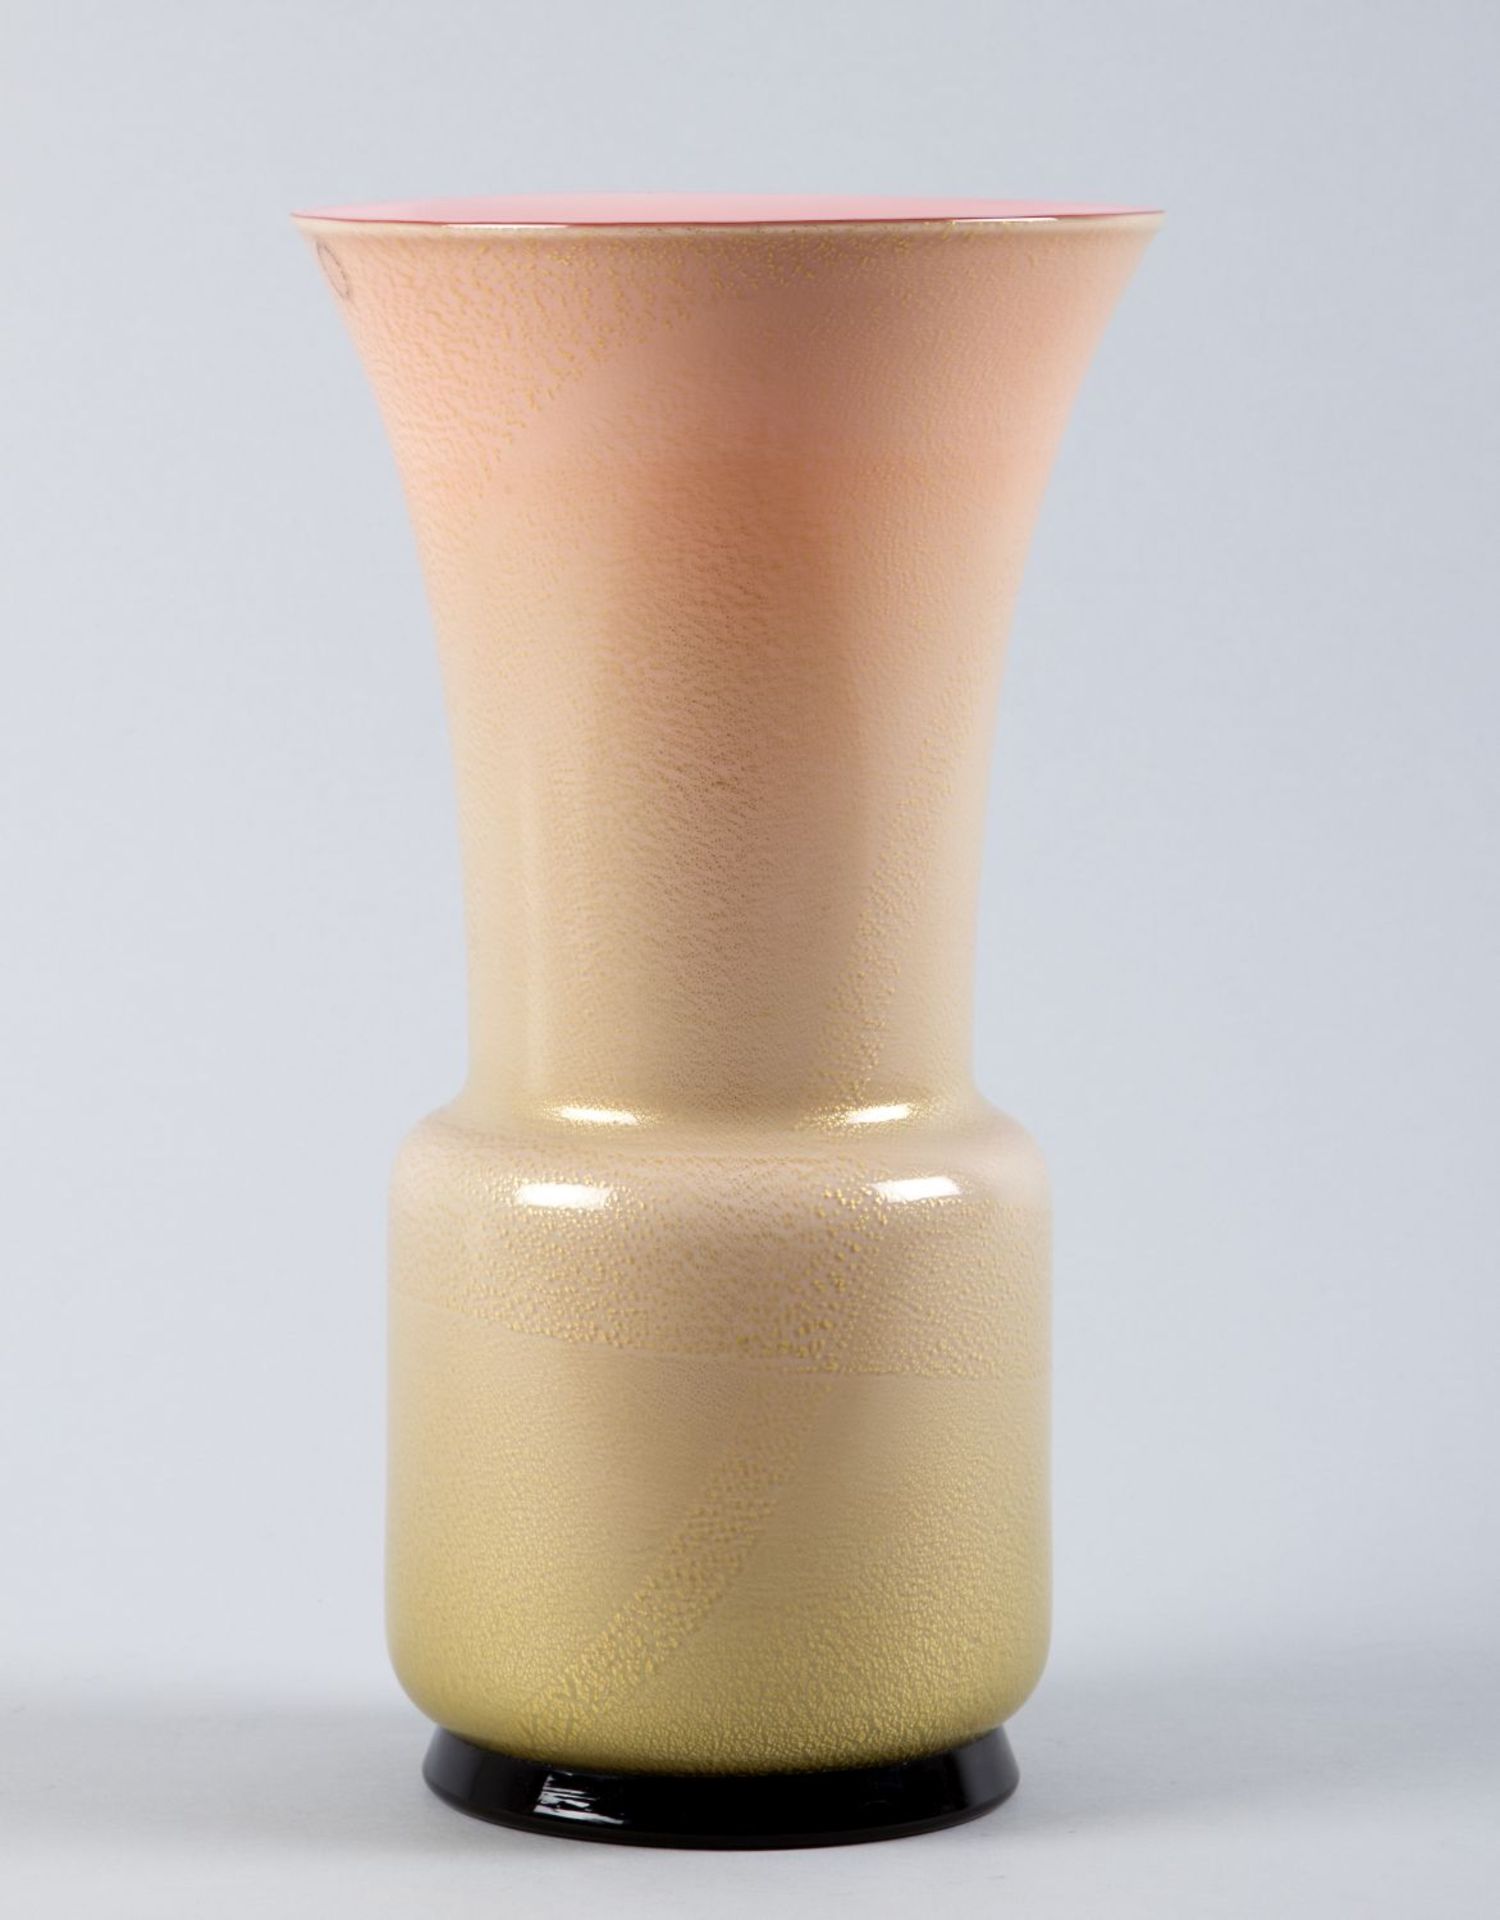 Murano-VaseFarbloses Glas, rosa unterfangen, gesprengte Goldfolie. Im Boden bez. "venini 97". H.